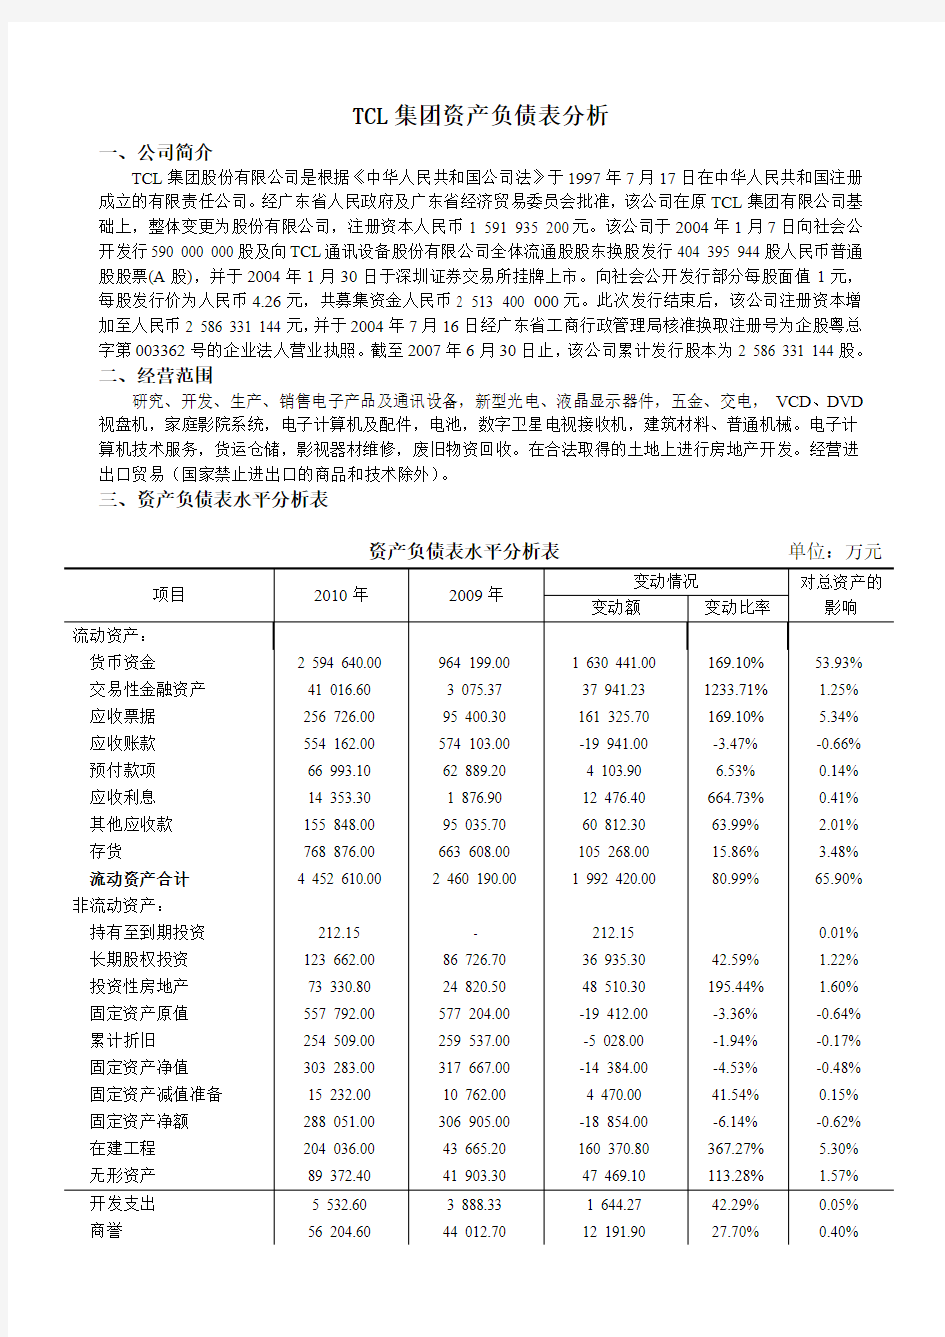 TCL集团资产负债表分析[1]